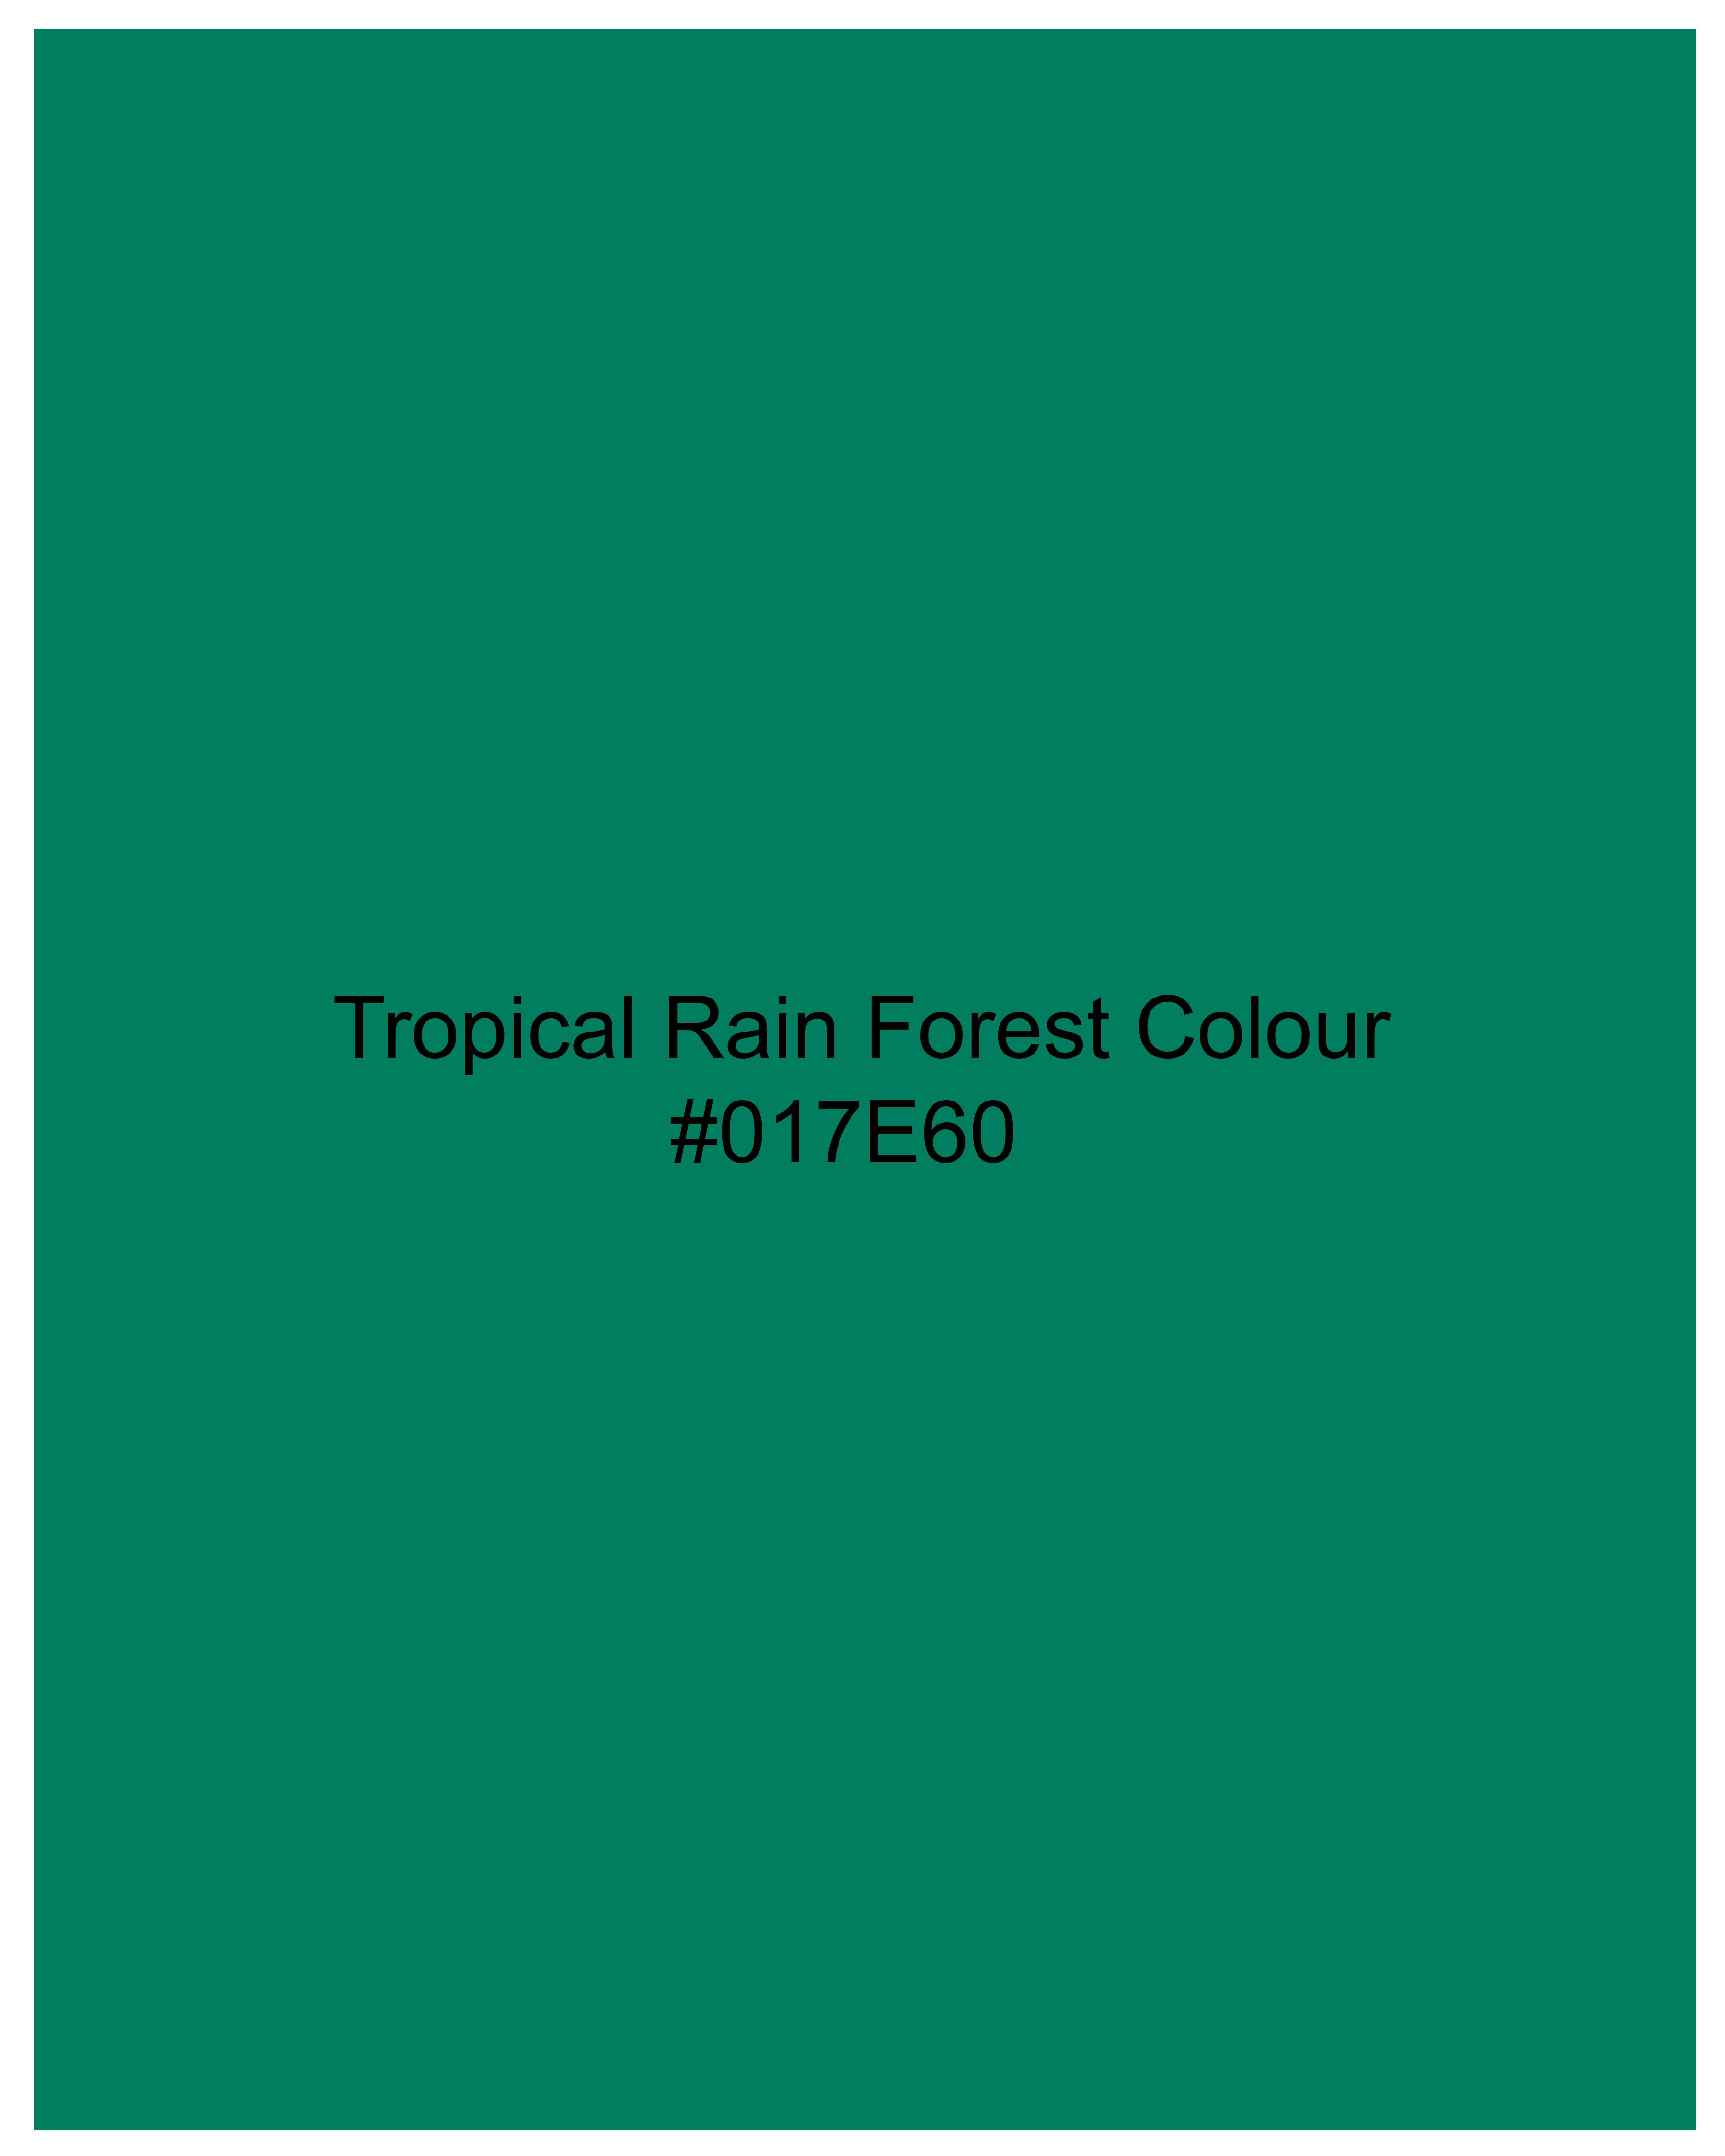 Tropical Rain Forest Green Honey Bee Hand-Painted Organic Cotton T-Shirt TS005-W04-S, TS005-W04-M, TS005-W04-L, TS005-W04-XL, TS005-W04-XXL